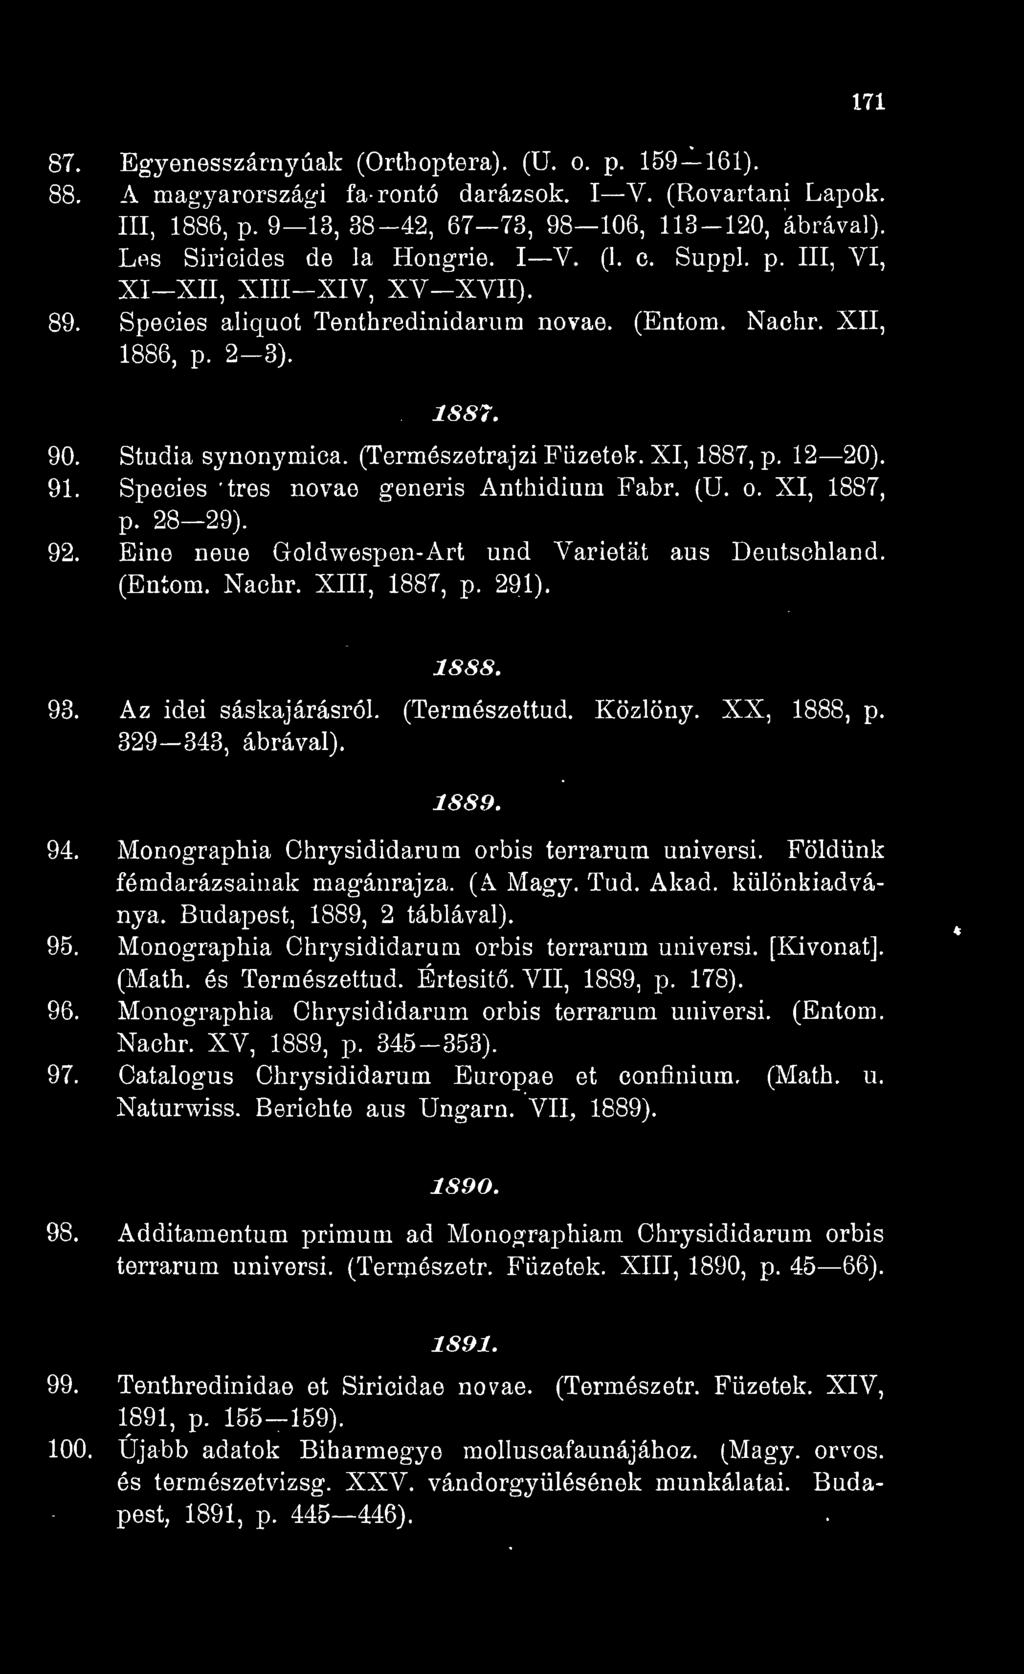 Studia synonymica. (Természetrajzi Füzetek. XI, 1887, p. 12 20). 91. Species trés novae generis Anthidium Fabr. (U. o. XI, 1887, p. 28 29). 92. Eine neue Goldwespen-Art und Varietát aus Deutschland.